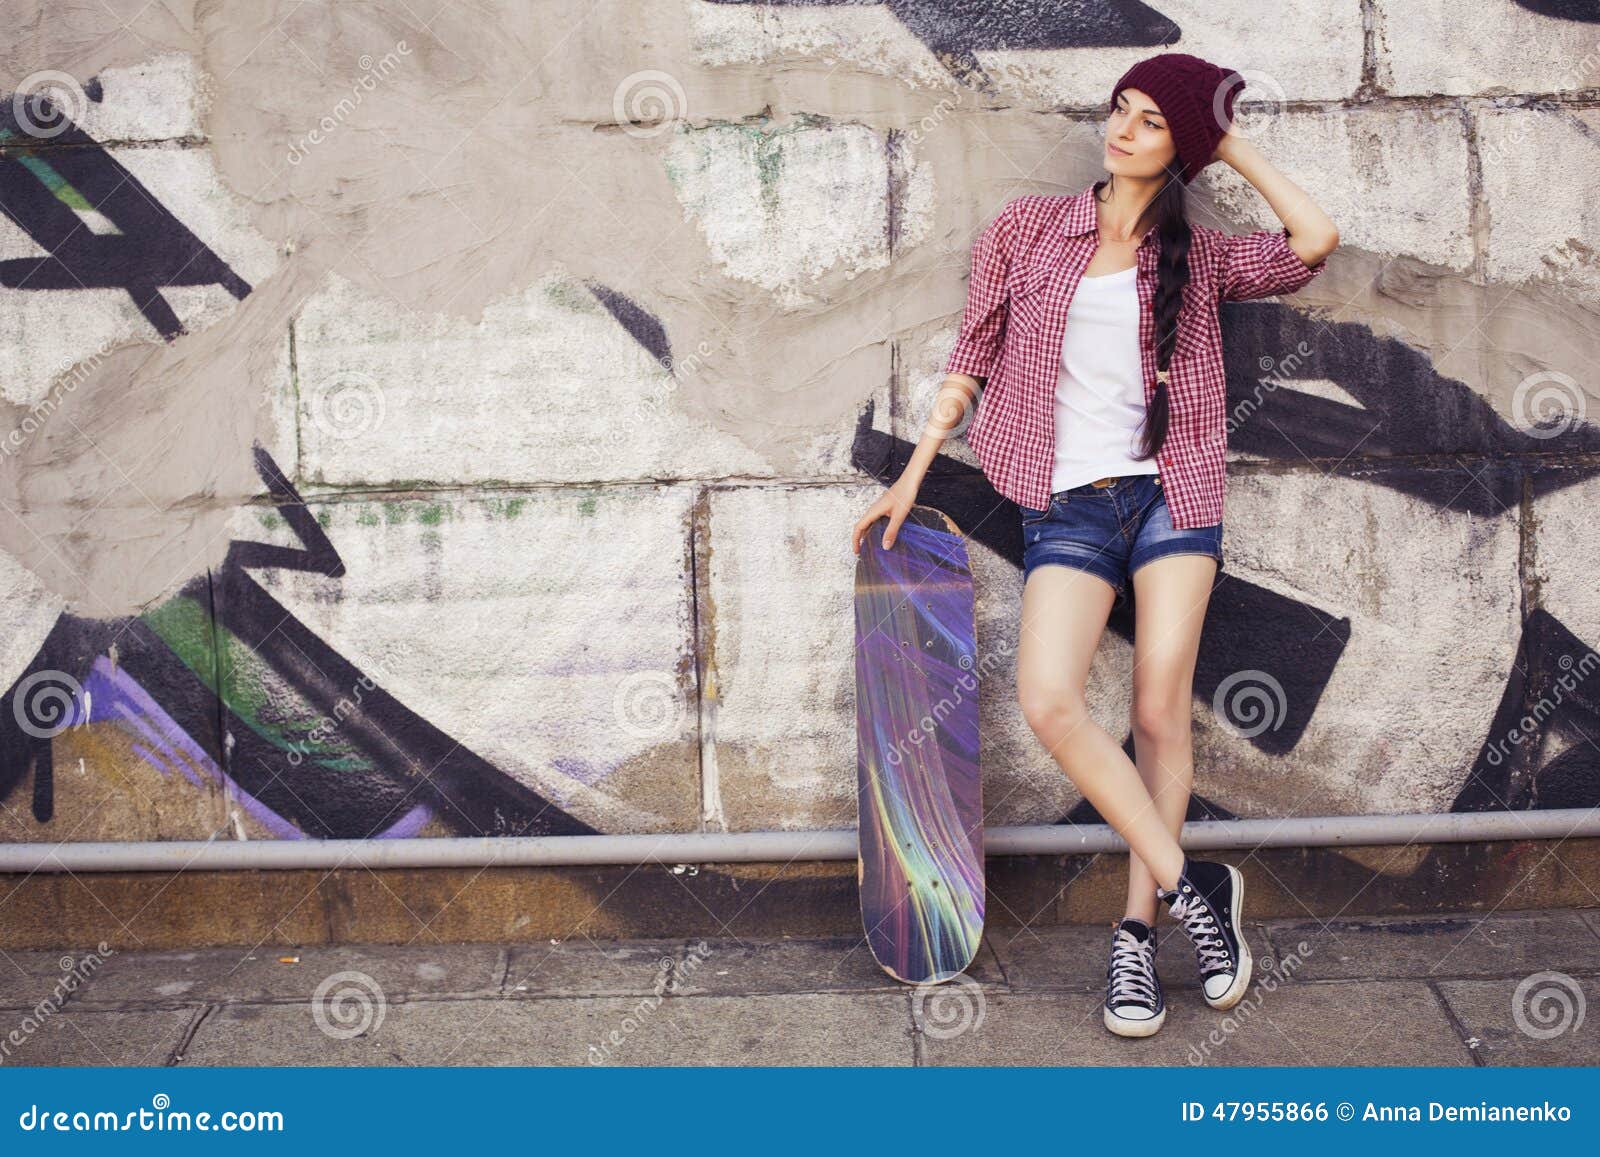 skateboard outfit girl